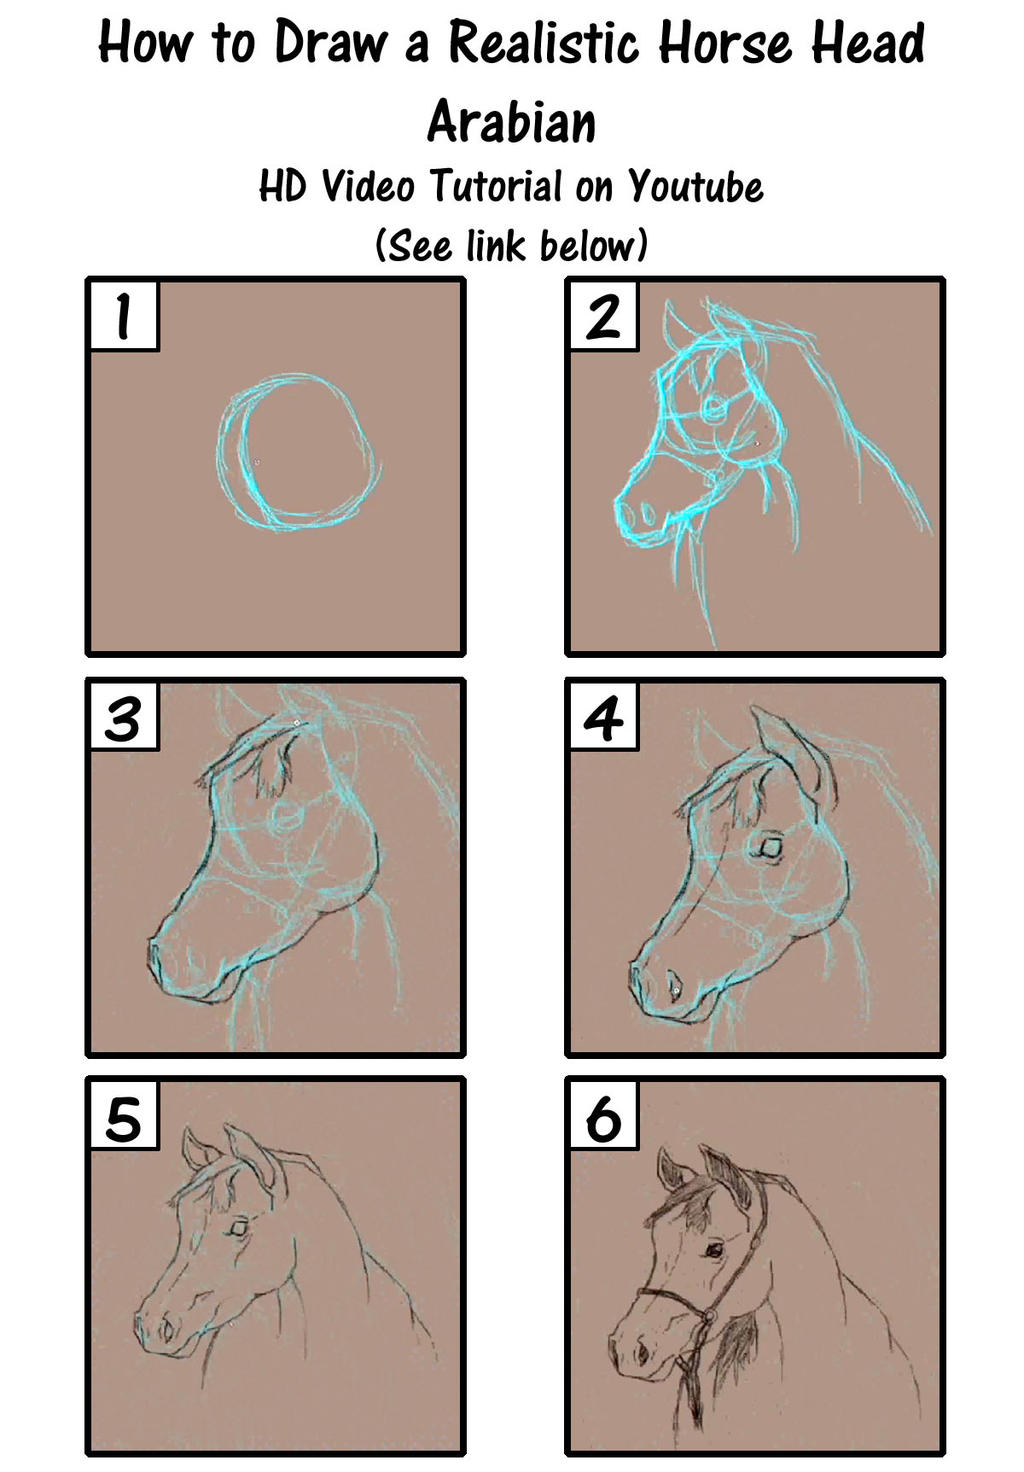 How to Draw a Realistic Horse Head Arabian by SavannaW on